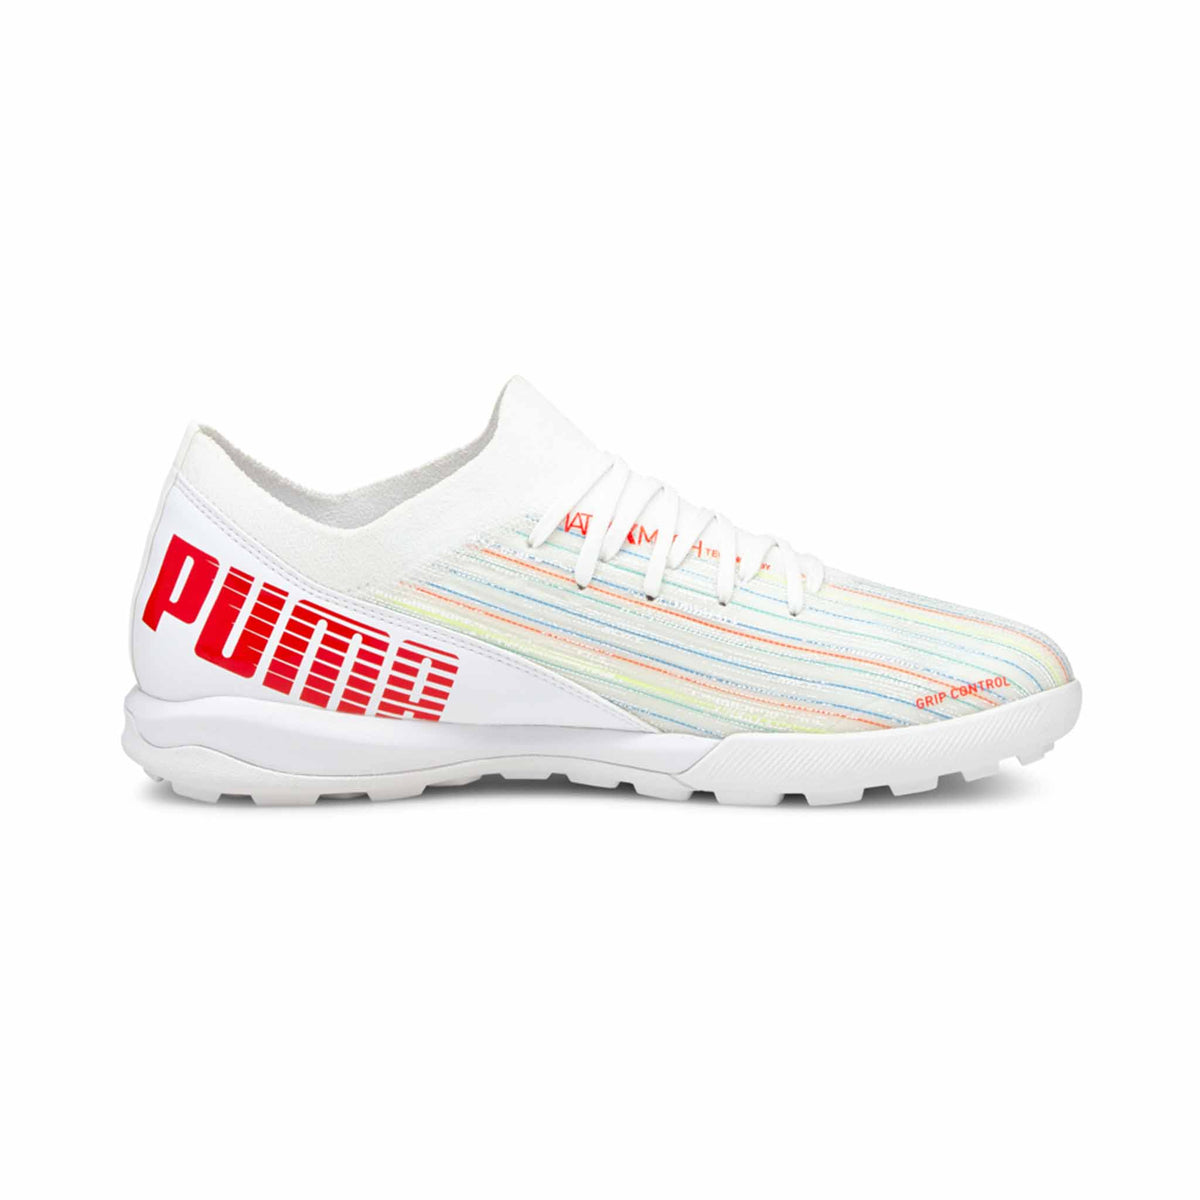 Puma Ultra 3.2 TT chaussures de soccer turf - Puma White / Red Blast - côté